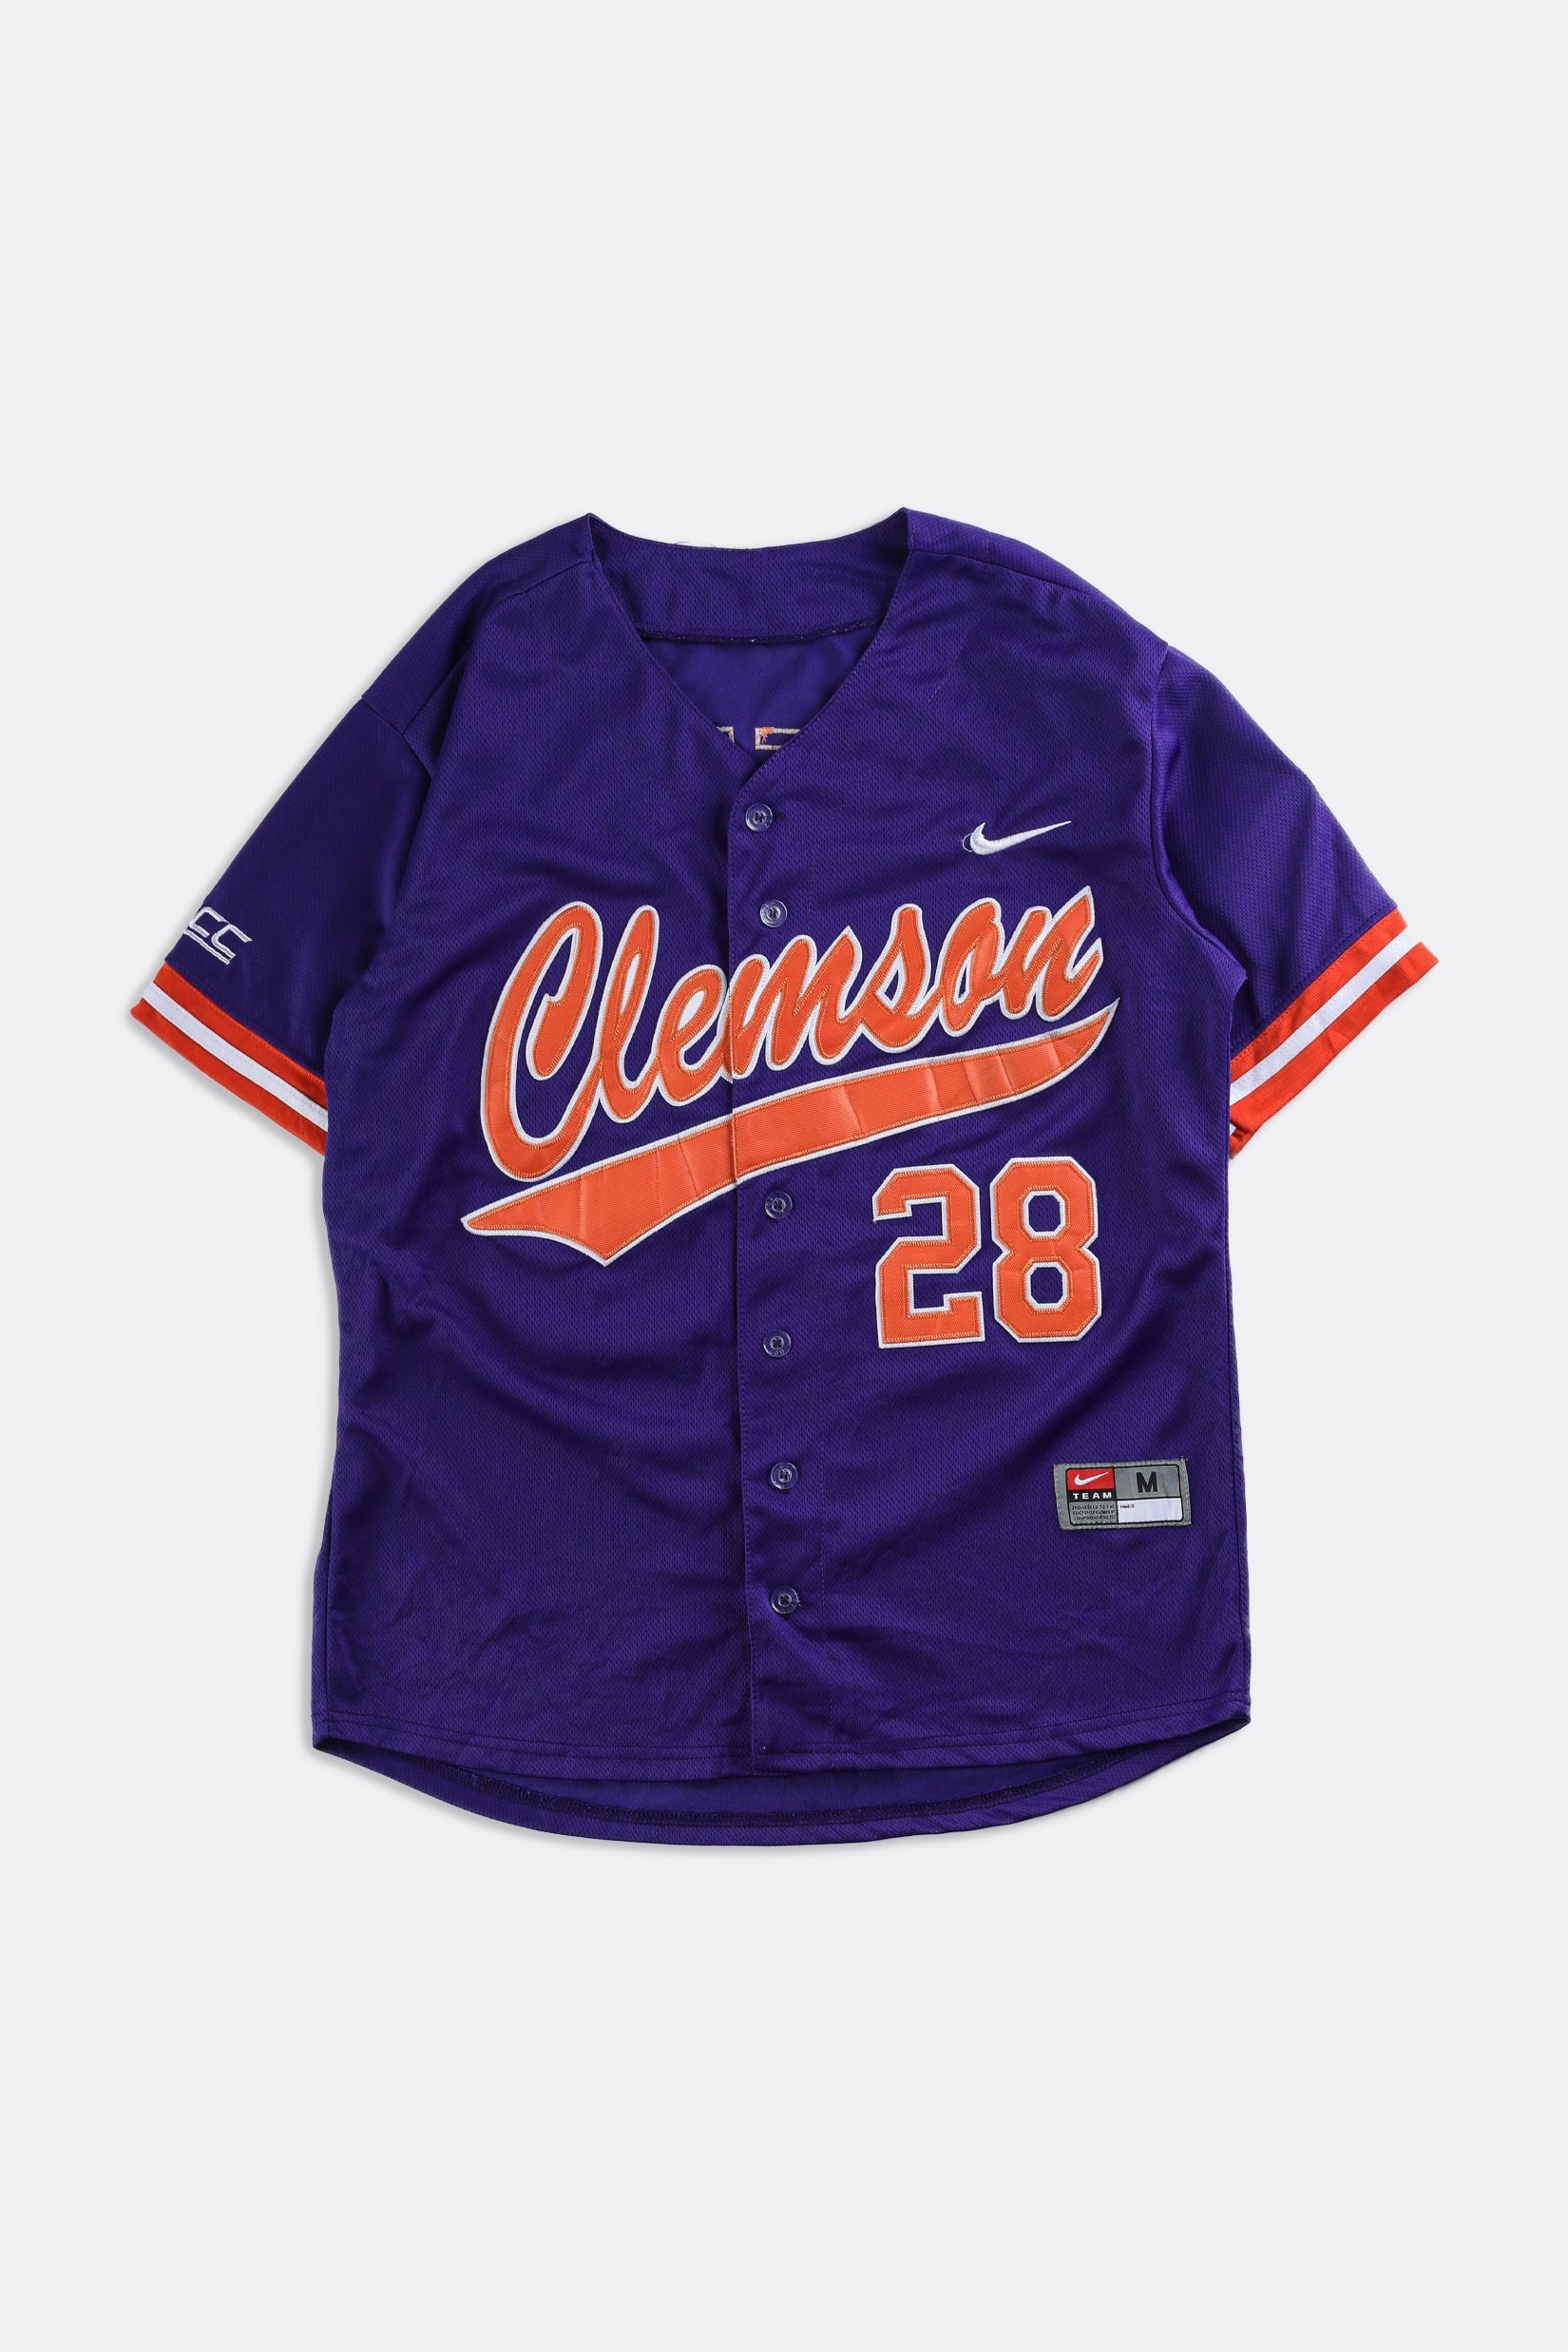 Vintage Clemson Tigers Collegiate Baseball Jersey